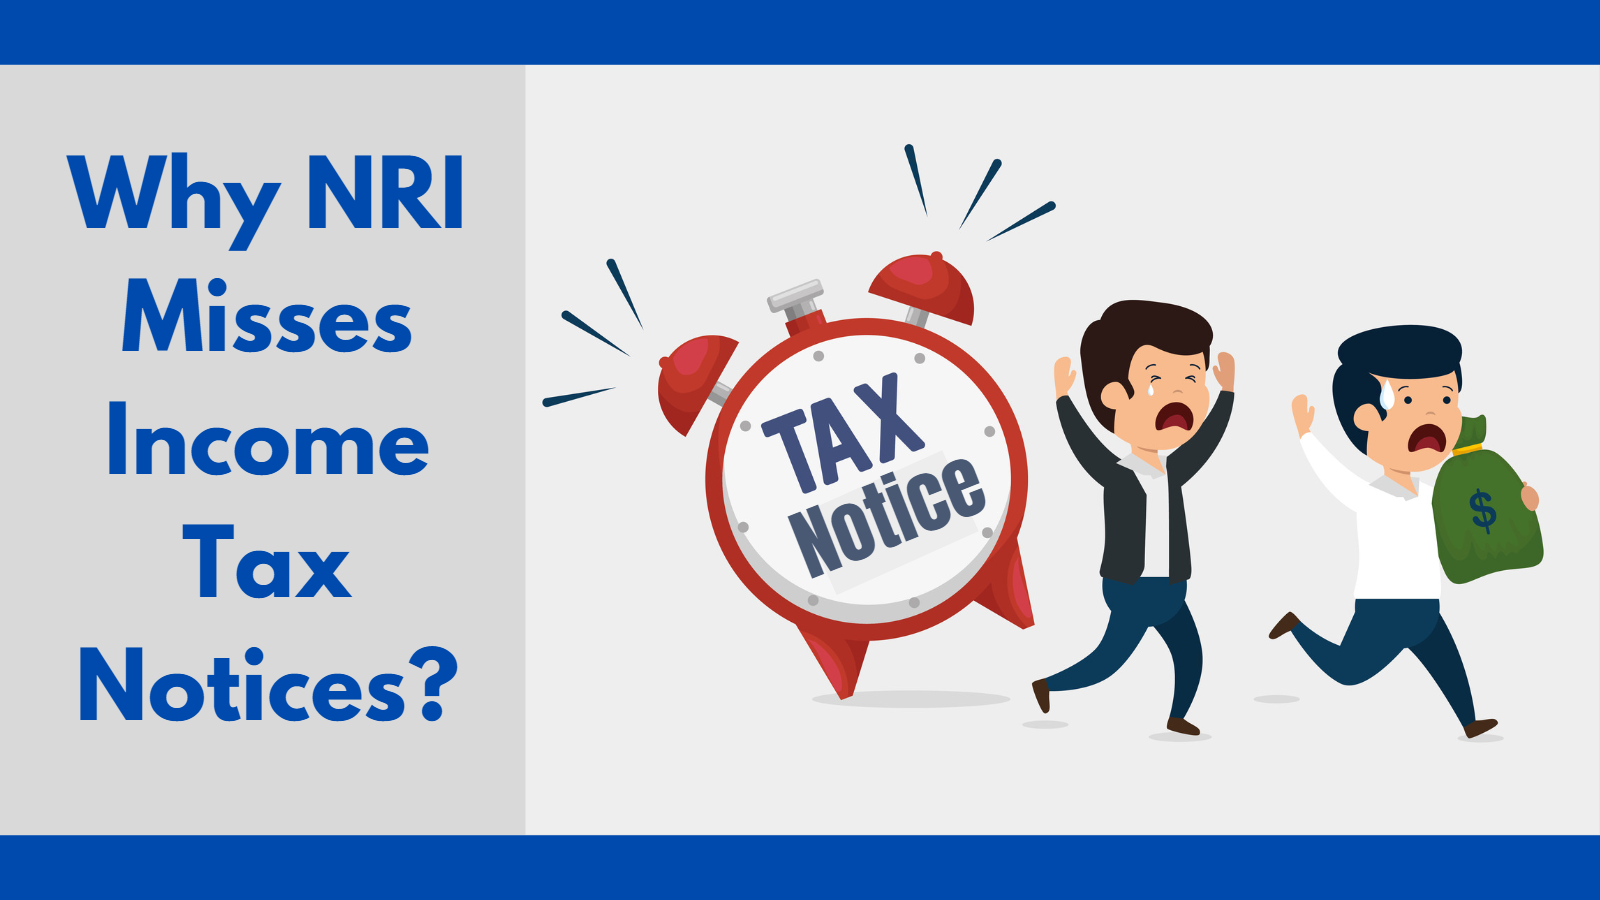 NRI Misses Income Tax Notices